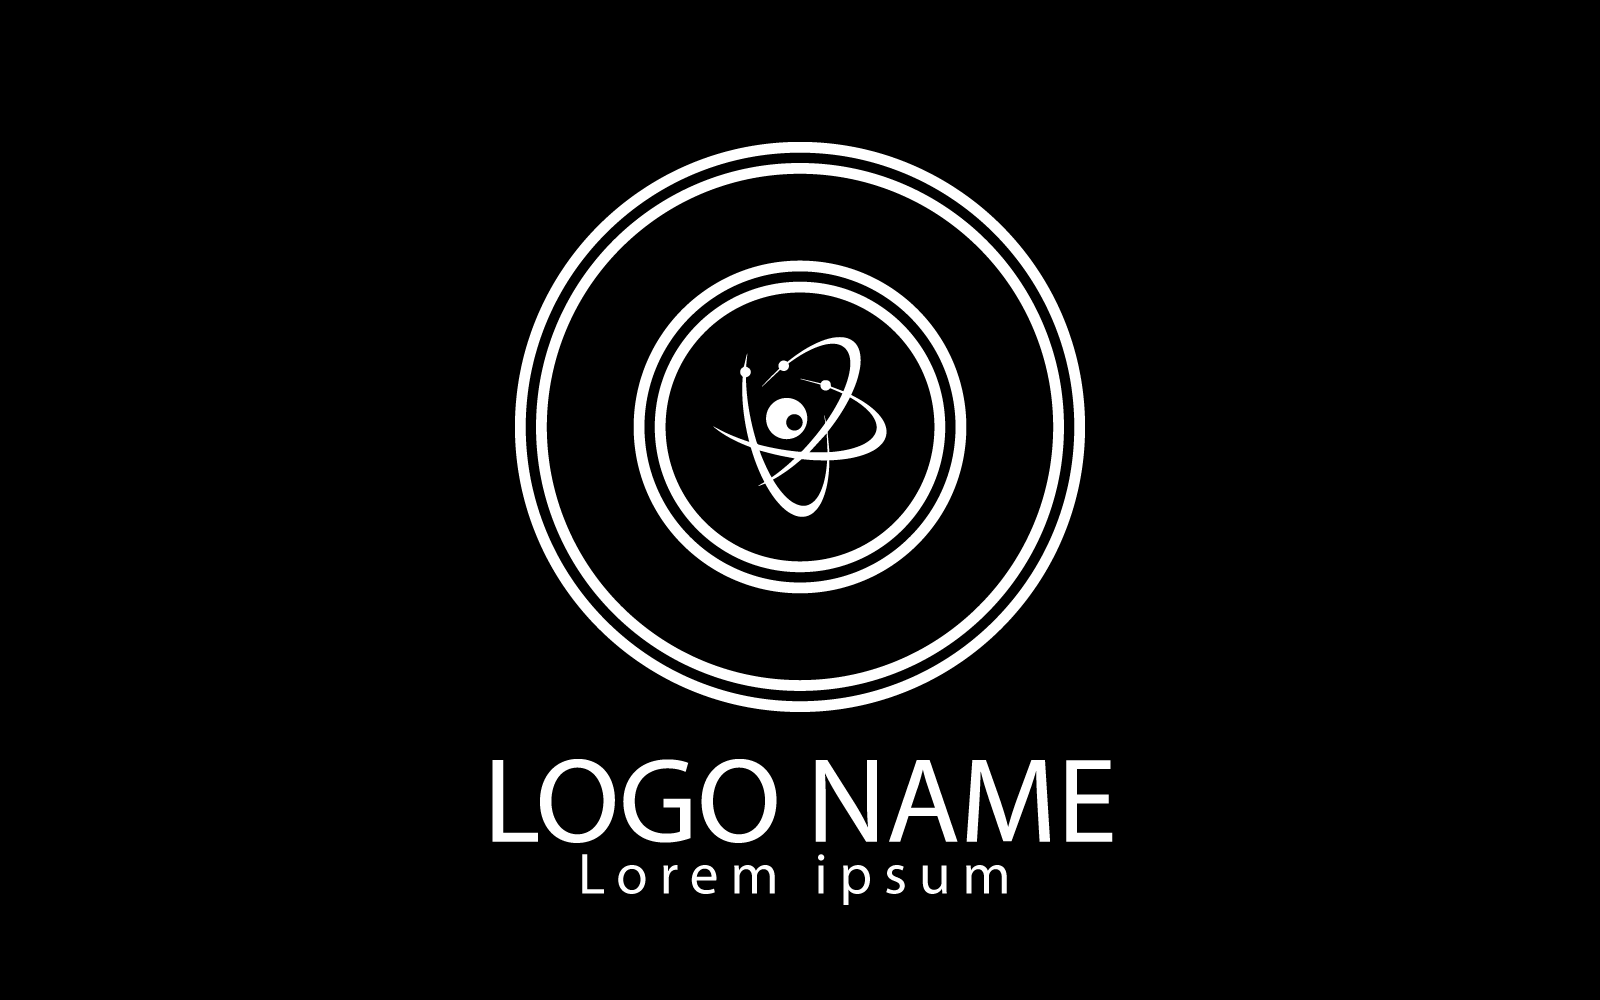 Unique And Creative Atom Logo